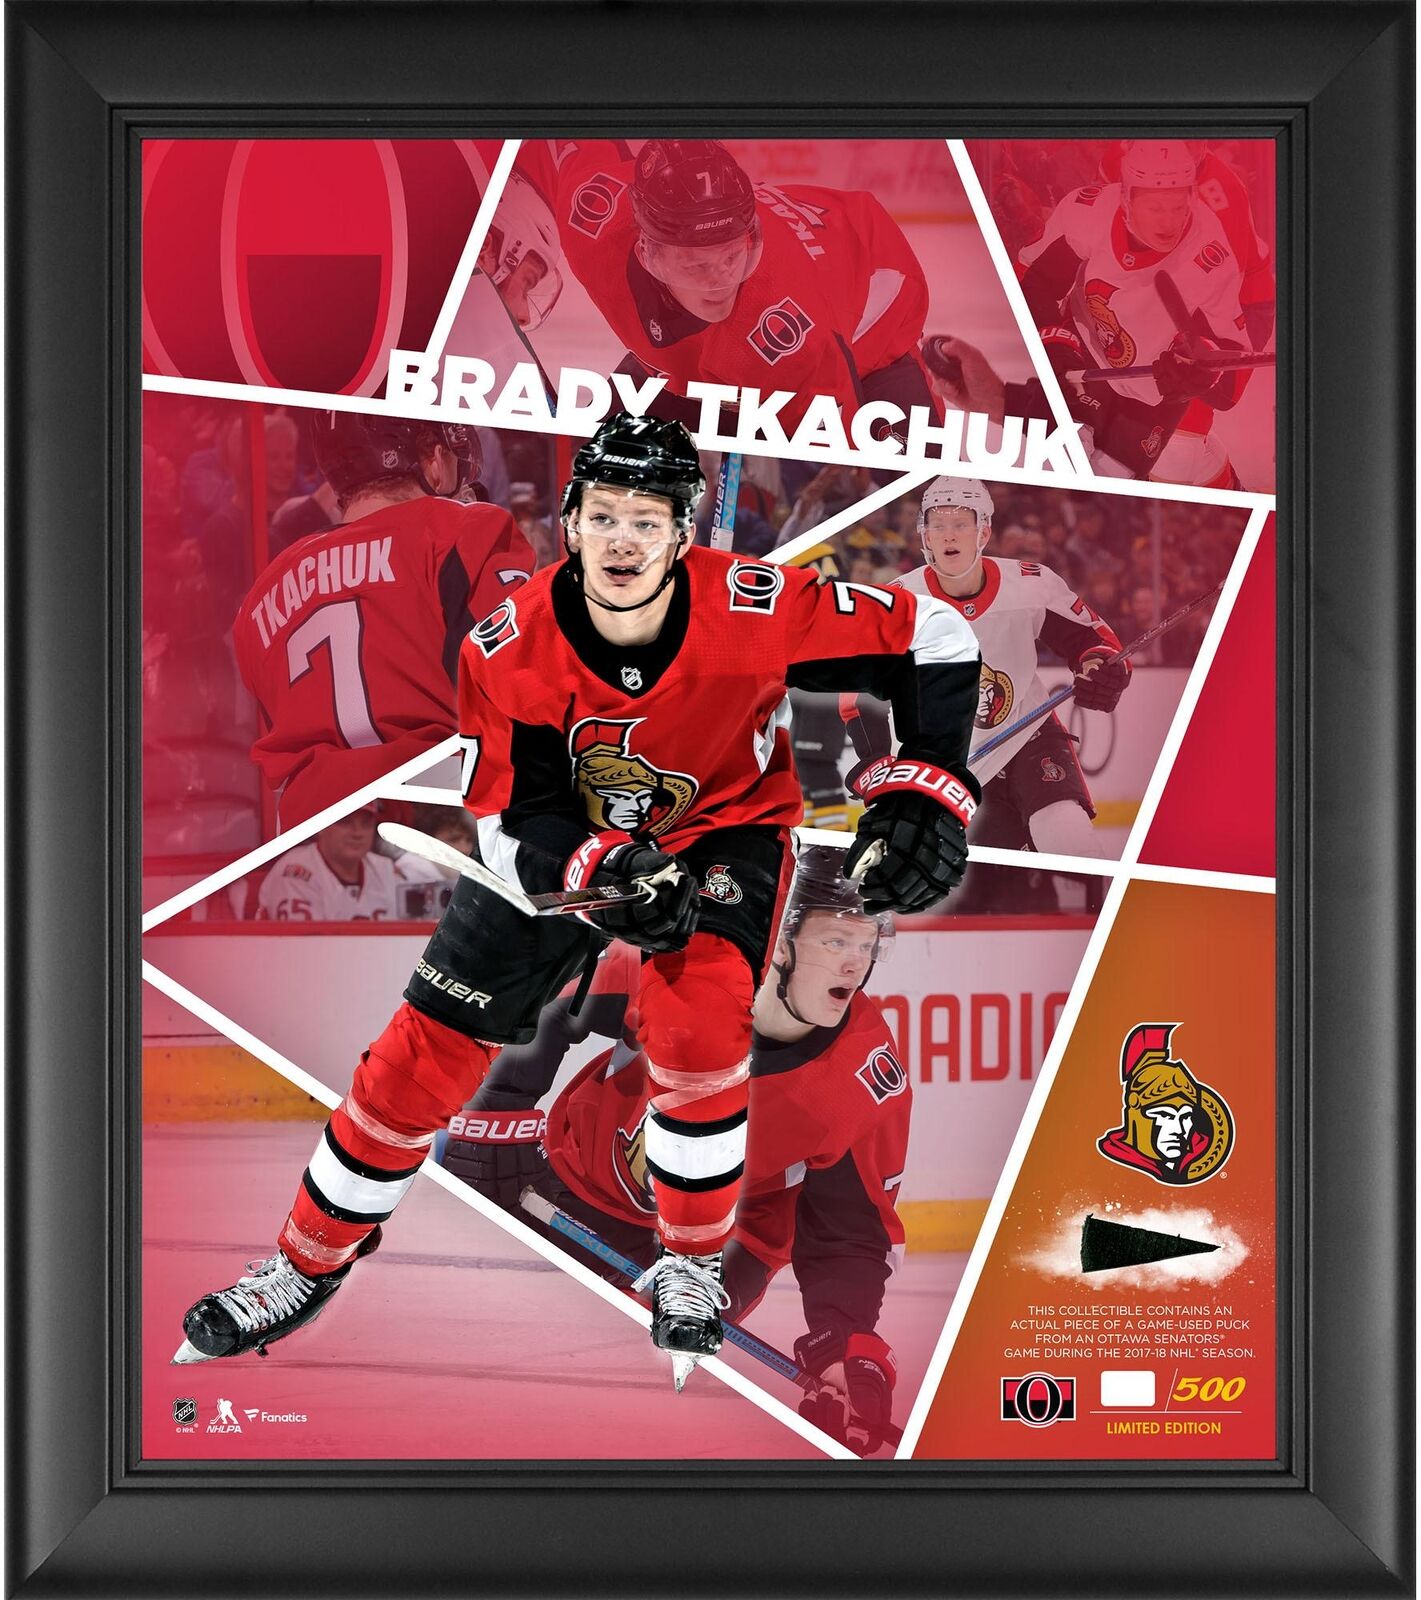 Brady Tkachuk Senators Framed 15x17 Player Collage & Piece of GU Puck - LE 500